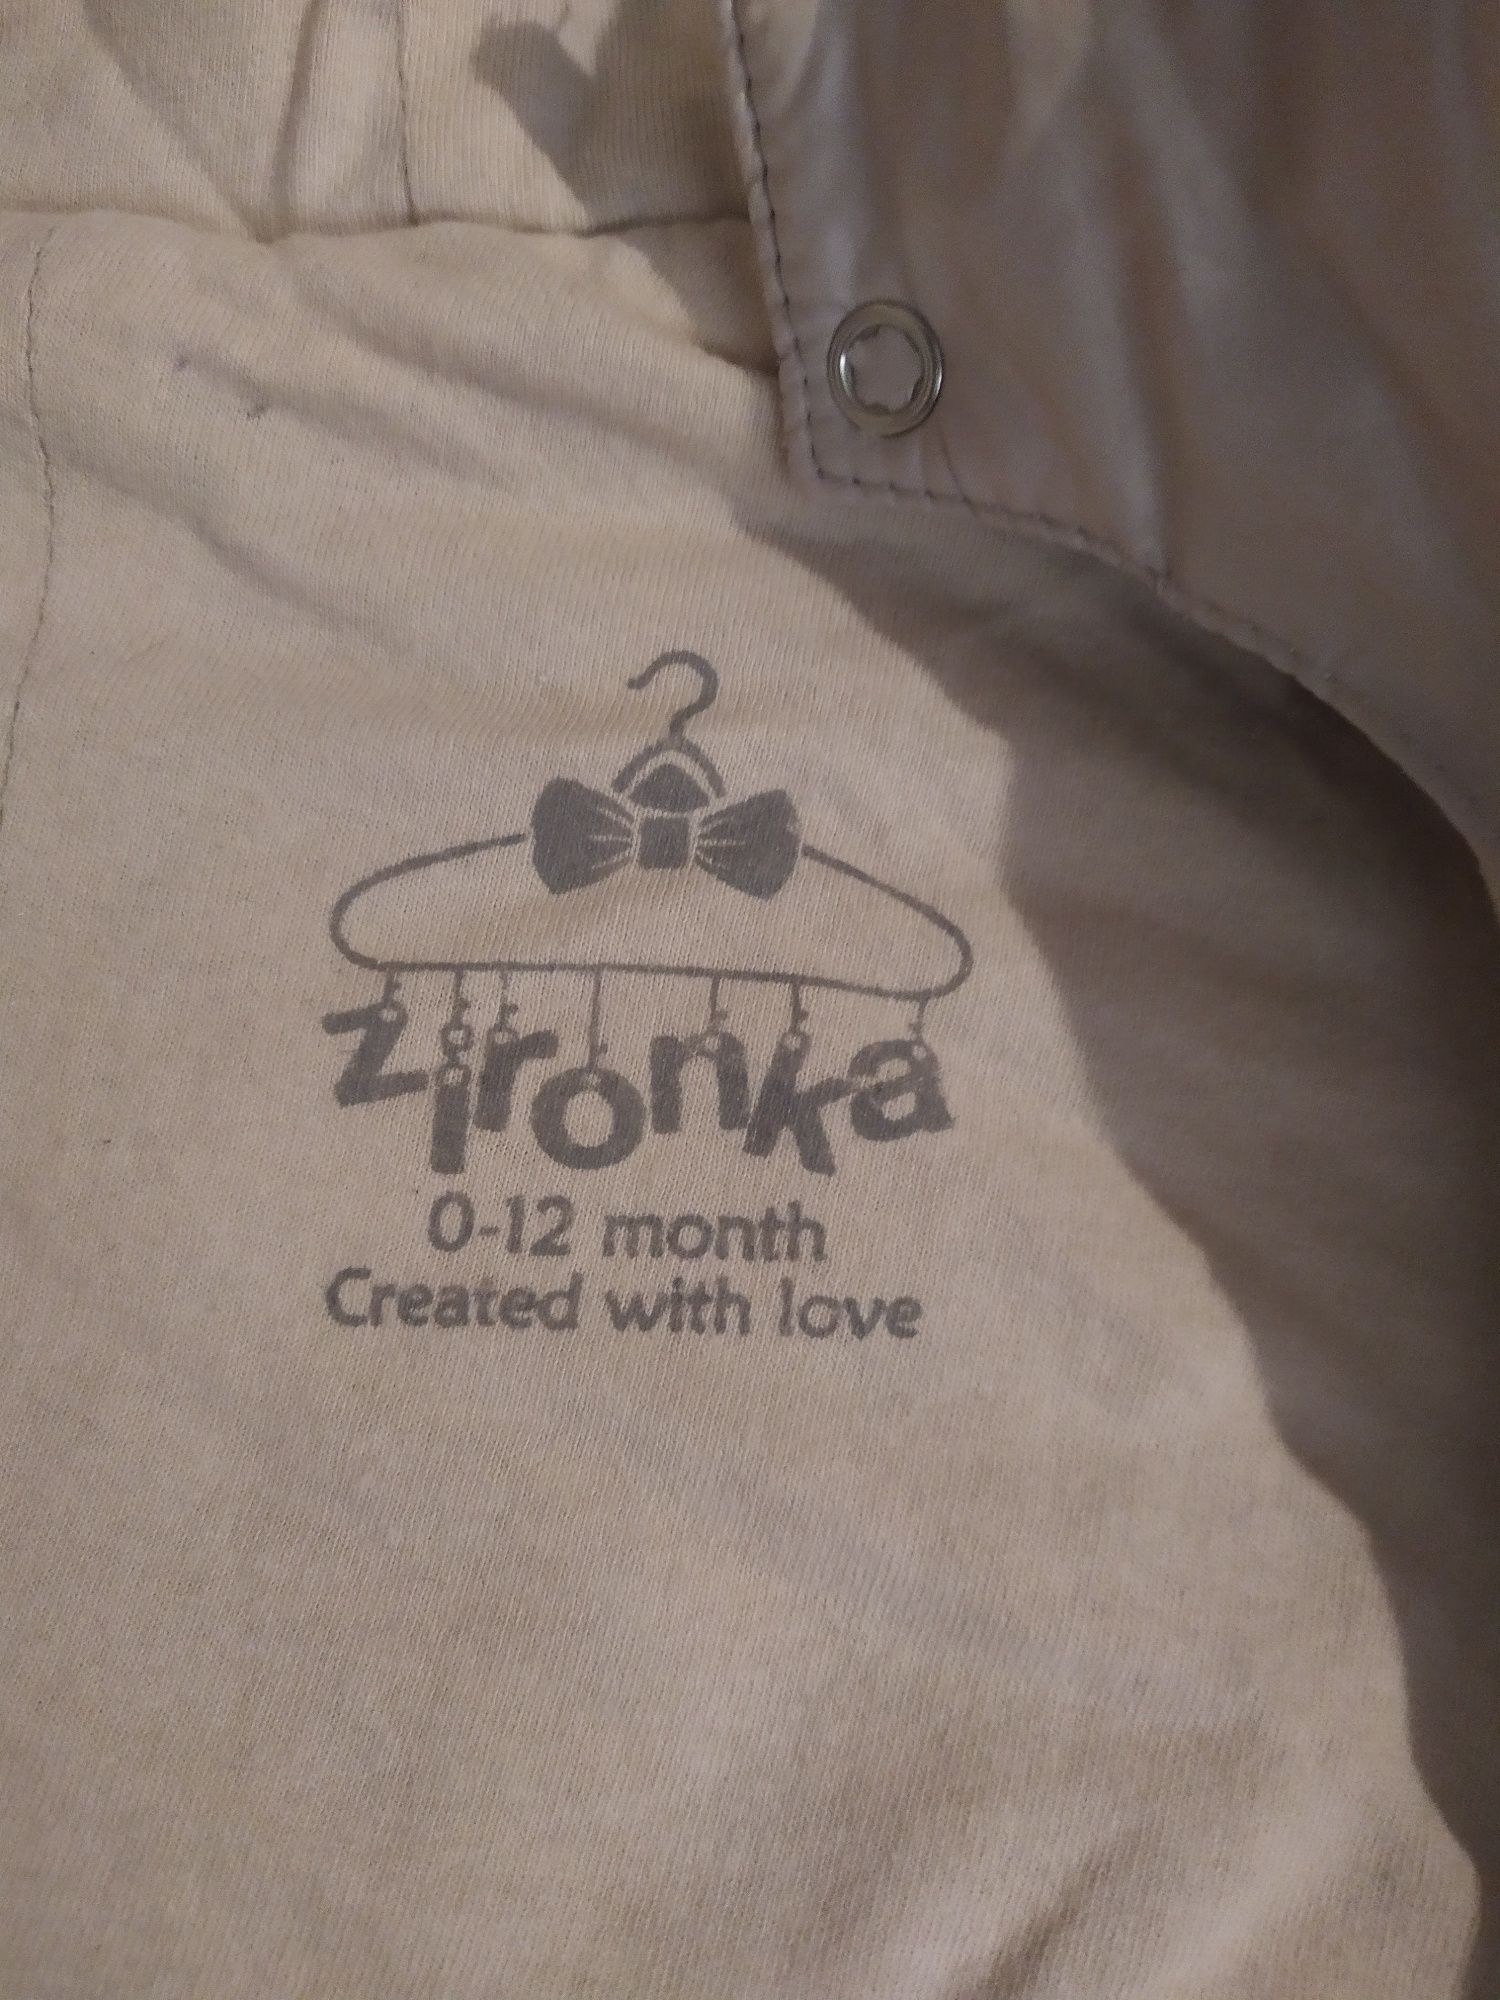 Комбинезон детский, от 0 до 12 месяцев. Фирма Zironka.